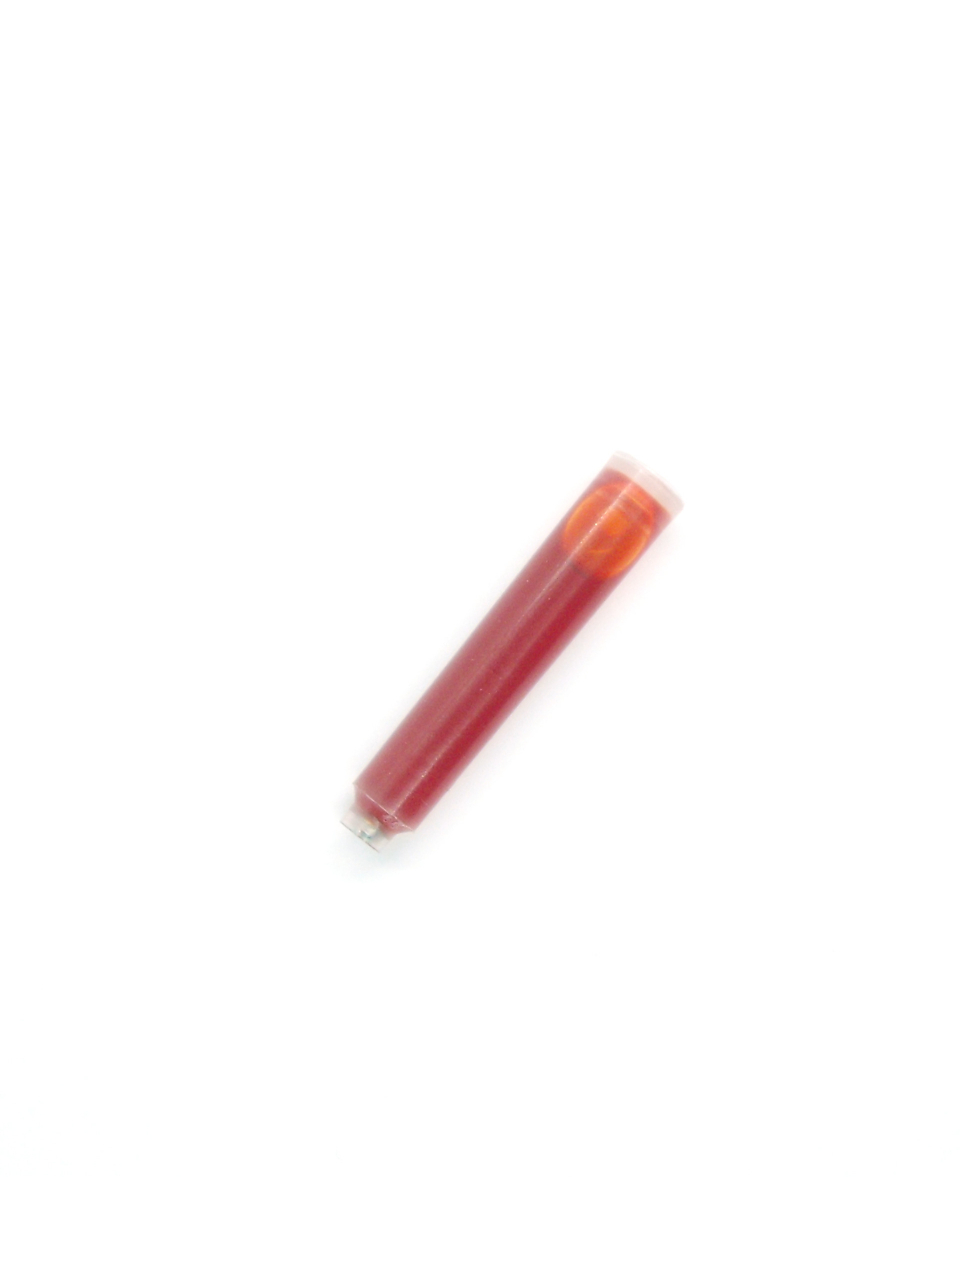 Ink Cartridges For Stypen Fountain Pens (Orange)